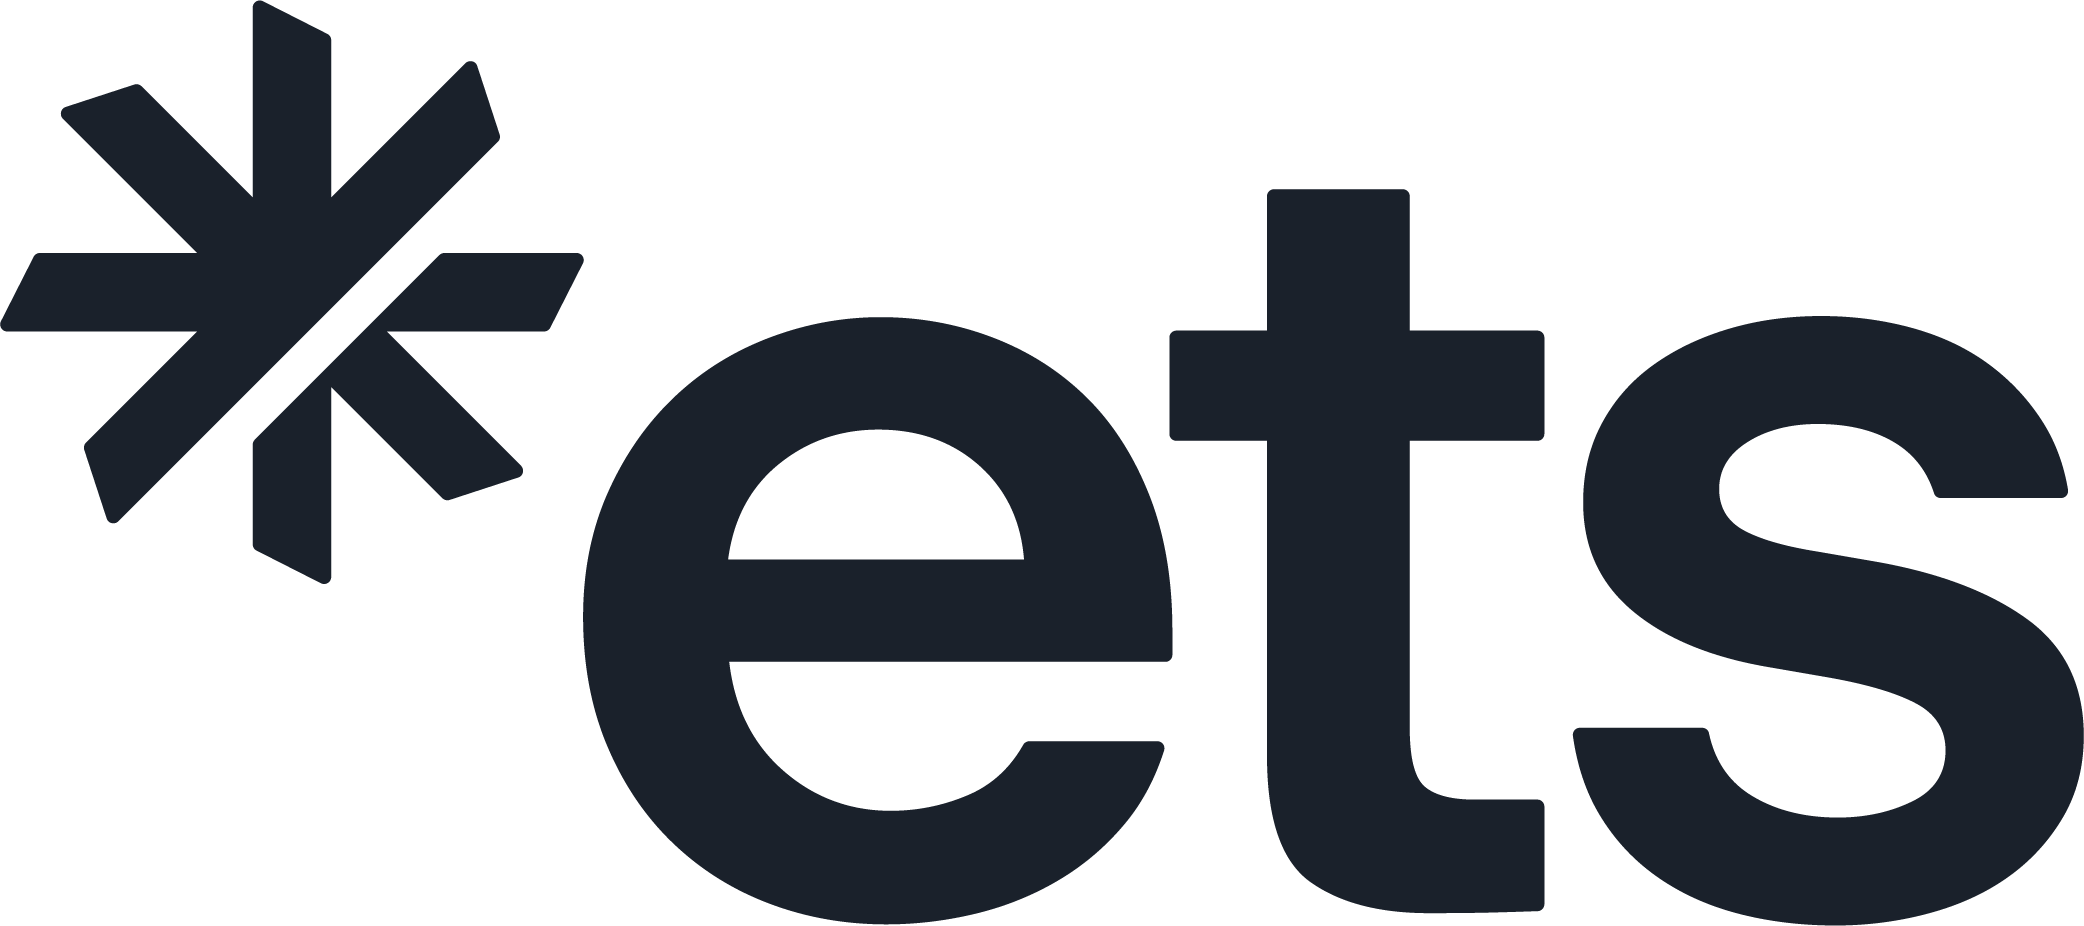 ETS Global logotype navy